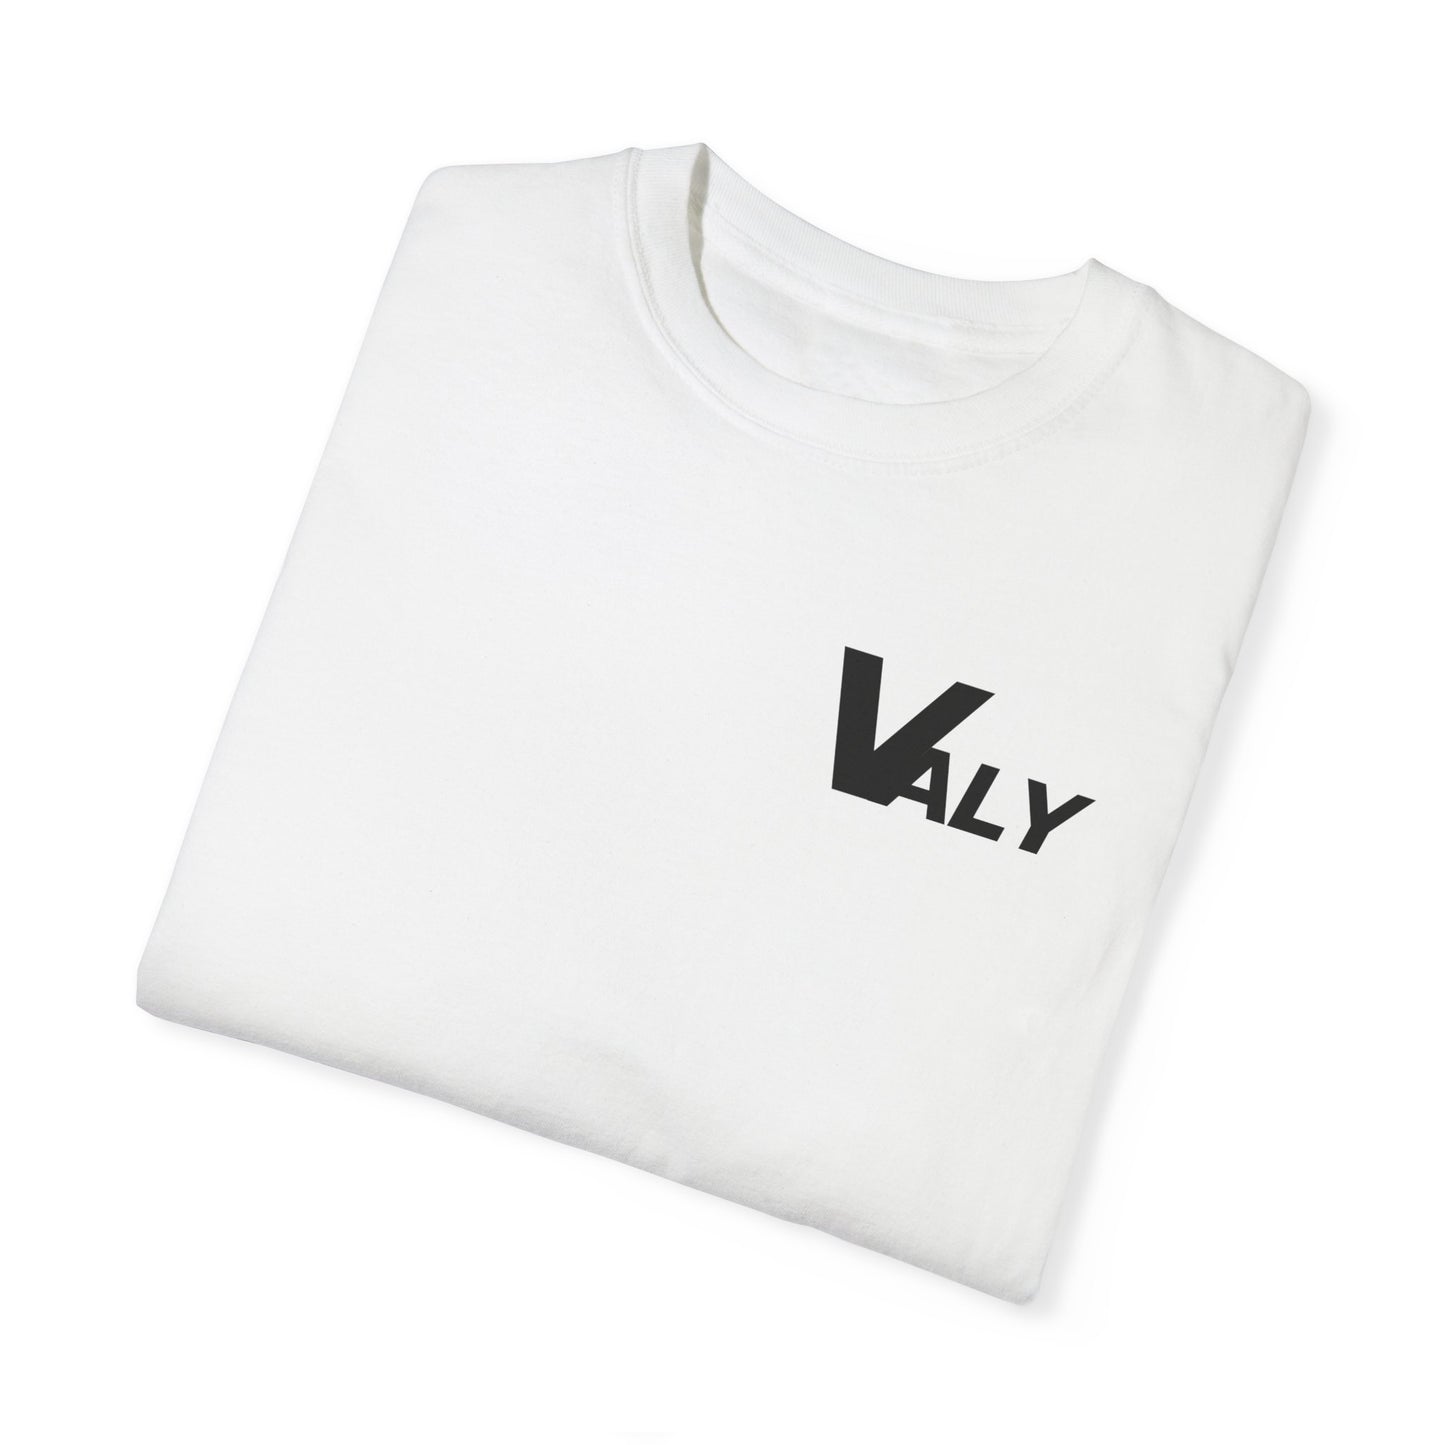 VALY Original T-Shirt - White